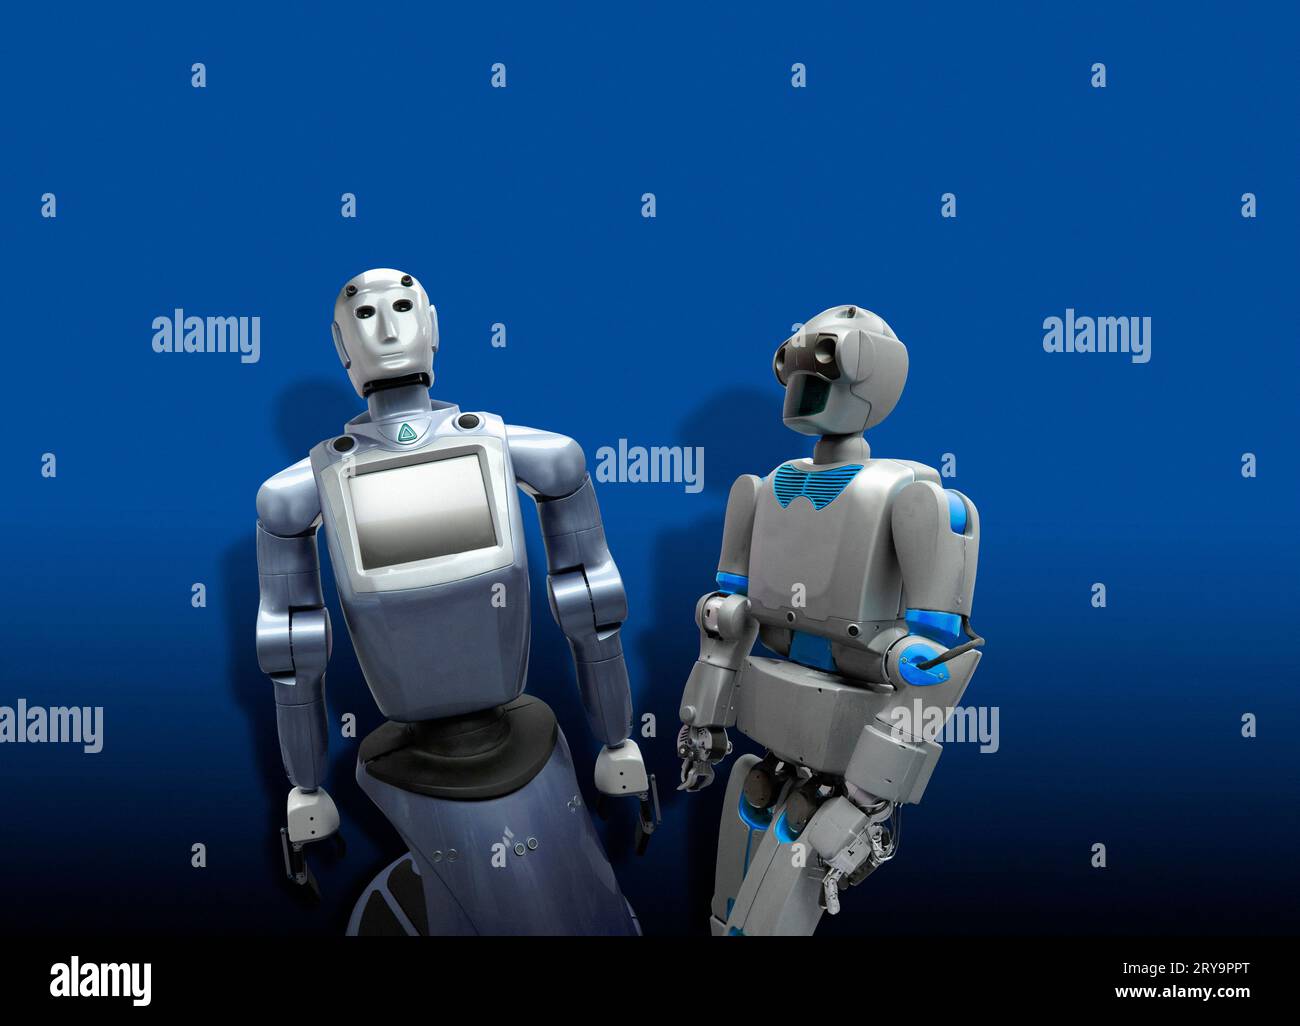 Robots, illustration Stock Photo